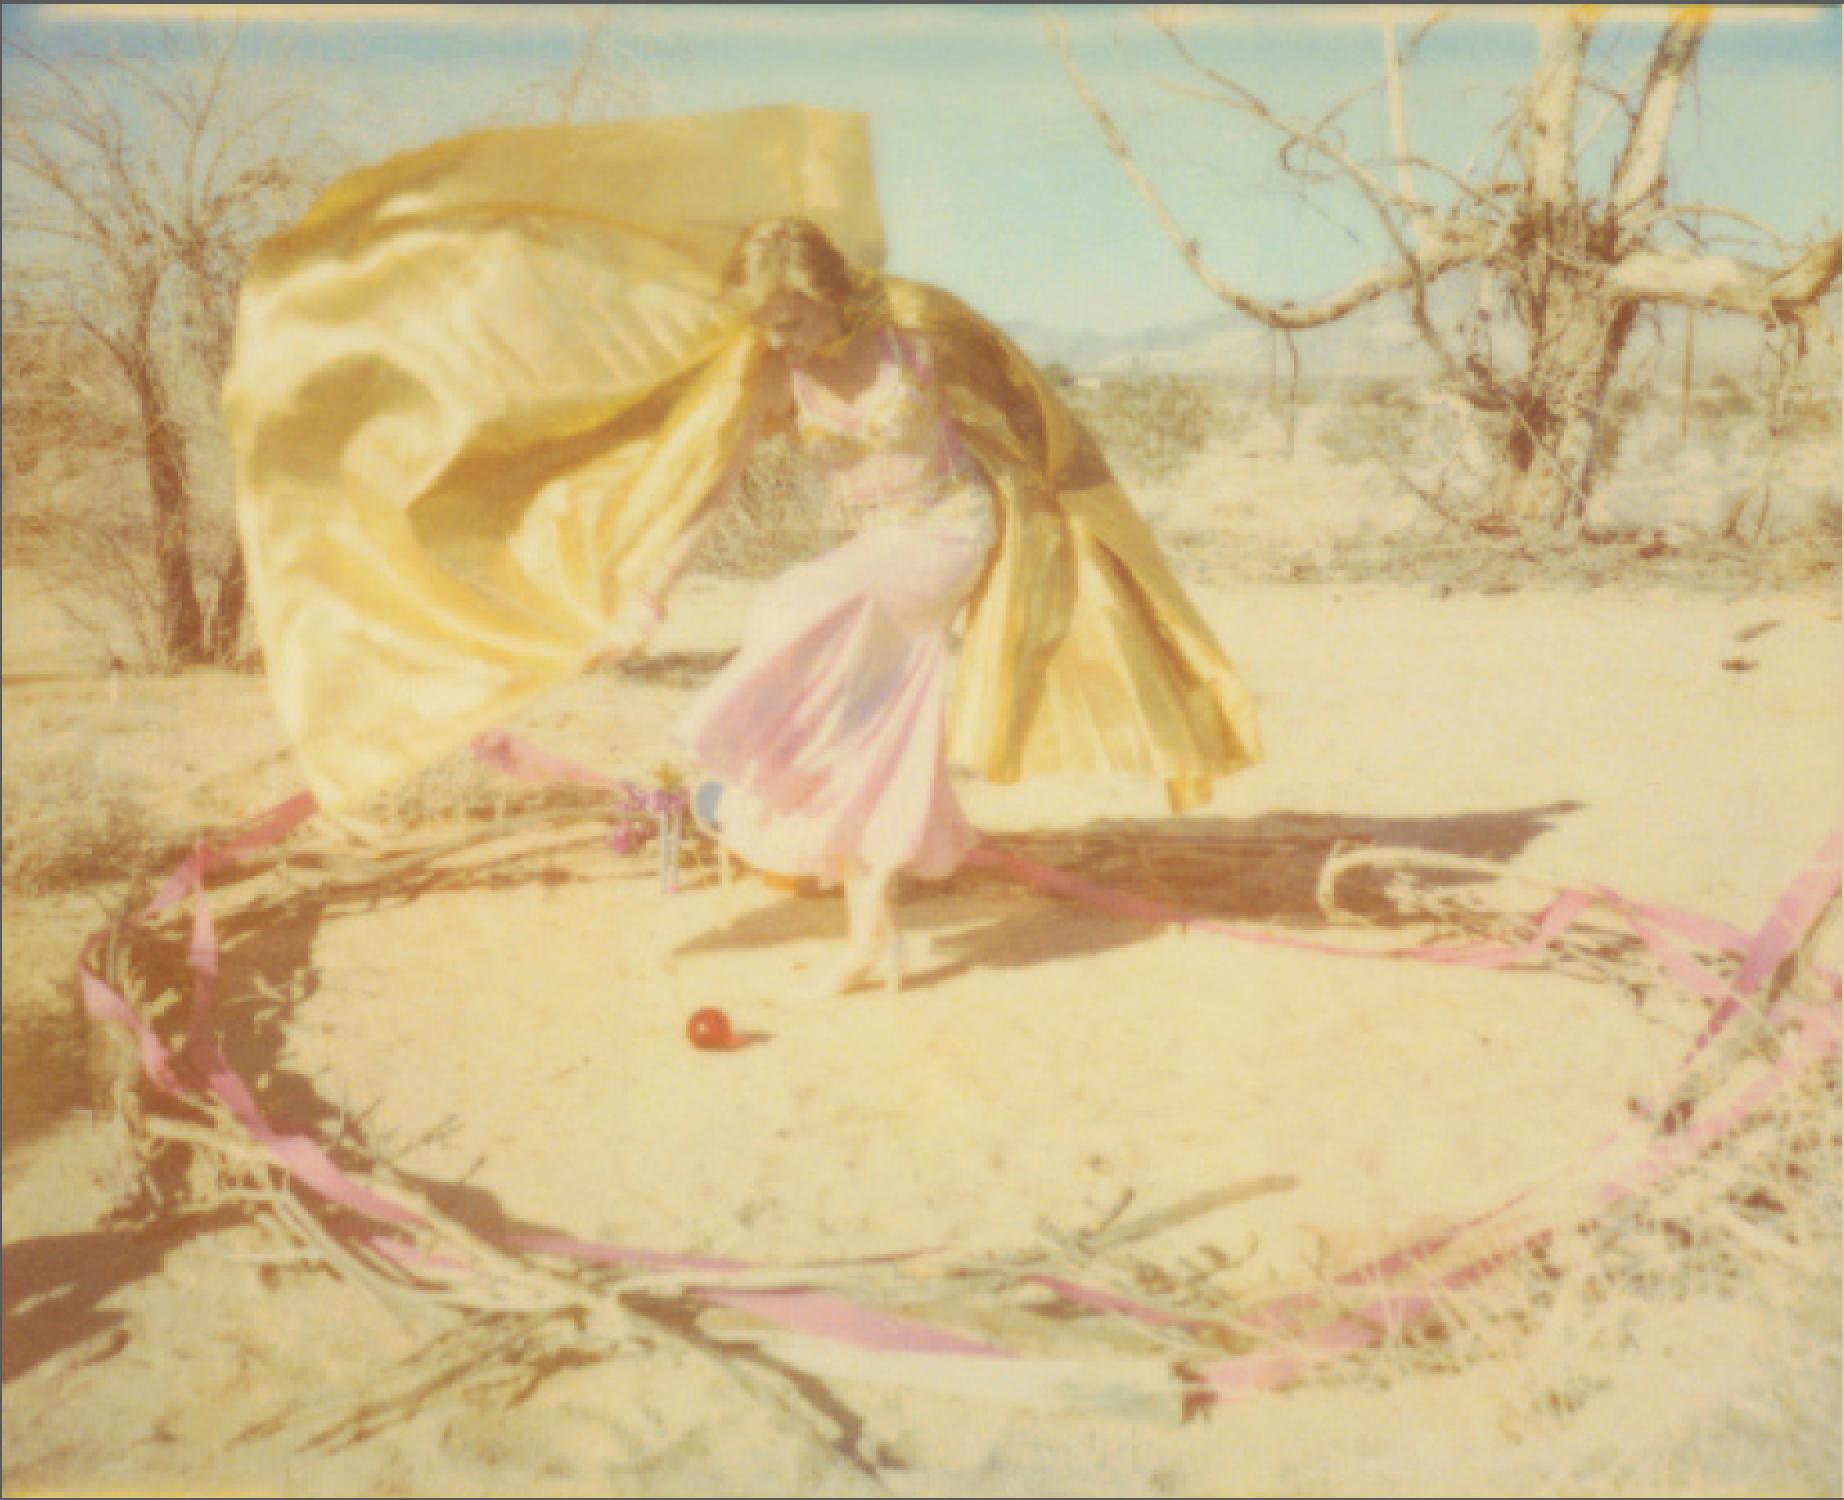 Stefanie Schneider Color Photograph - Circle of Magic - 29 Palms, CA, analog, Edition 3/5, 125x156cm